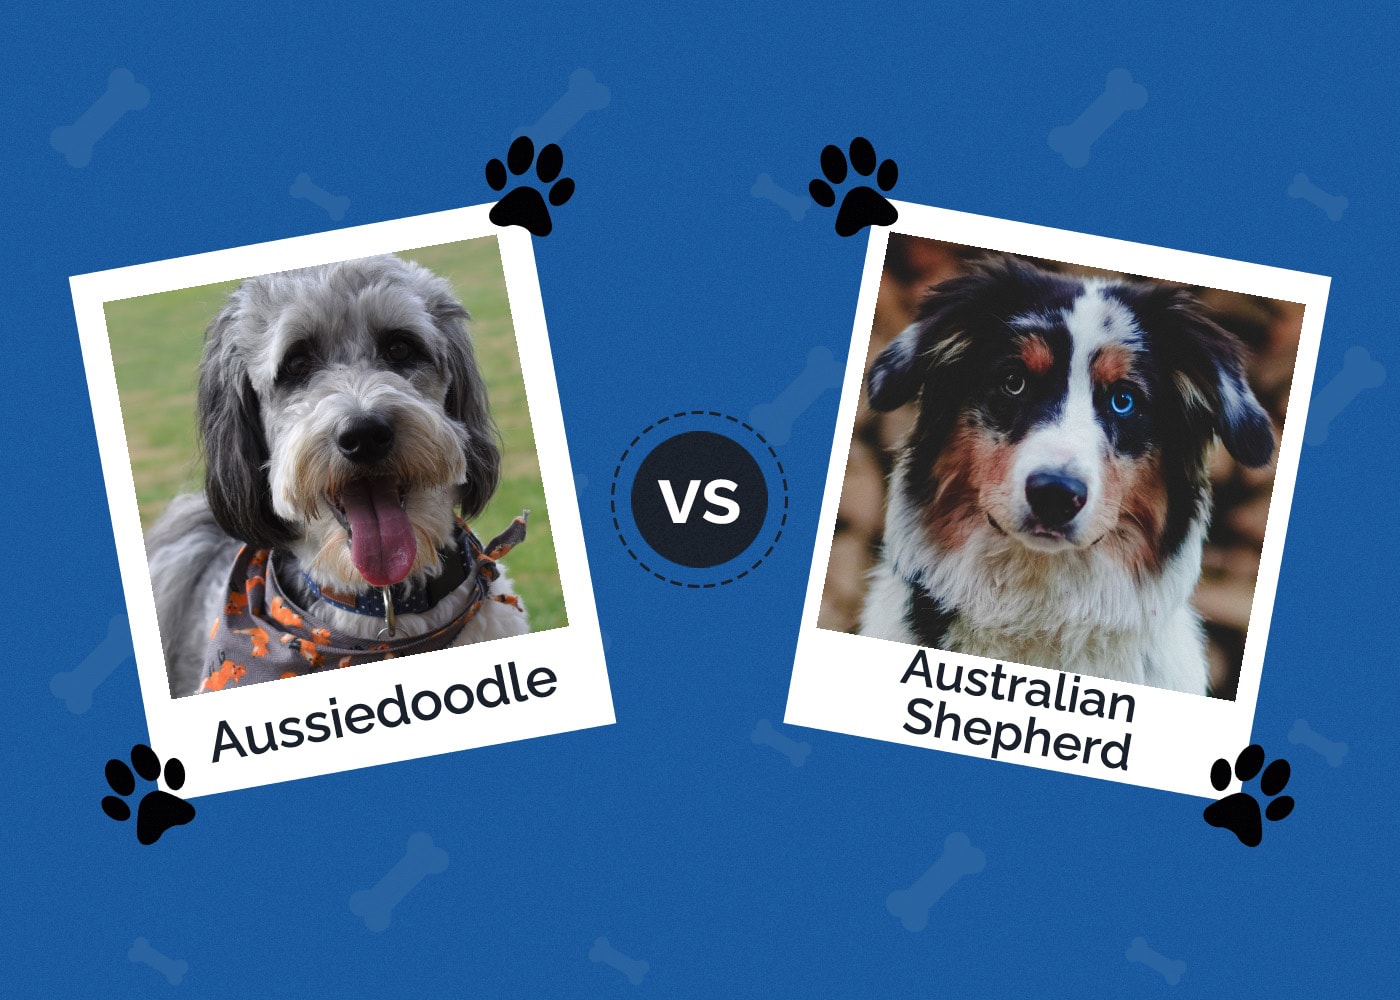 Aussiedoodle vs Australian Shepherd